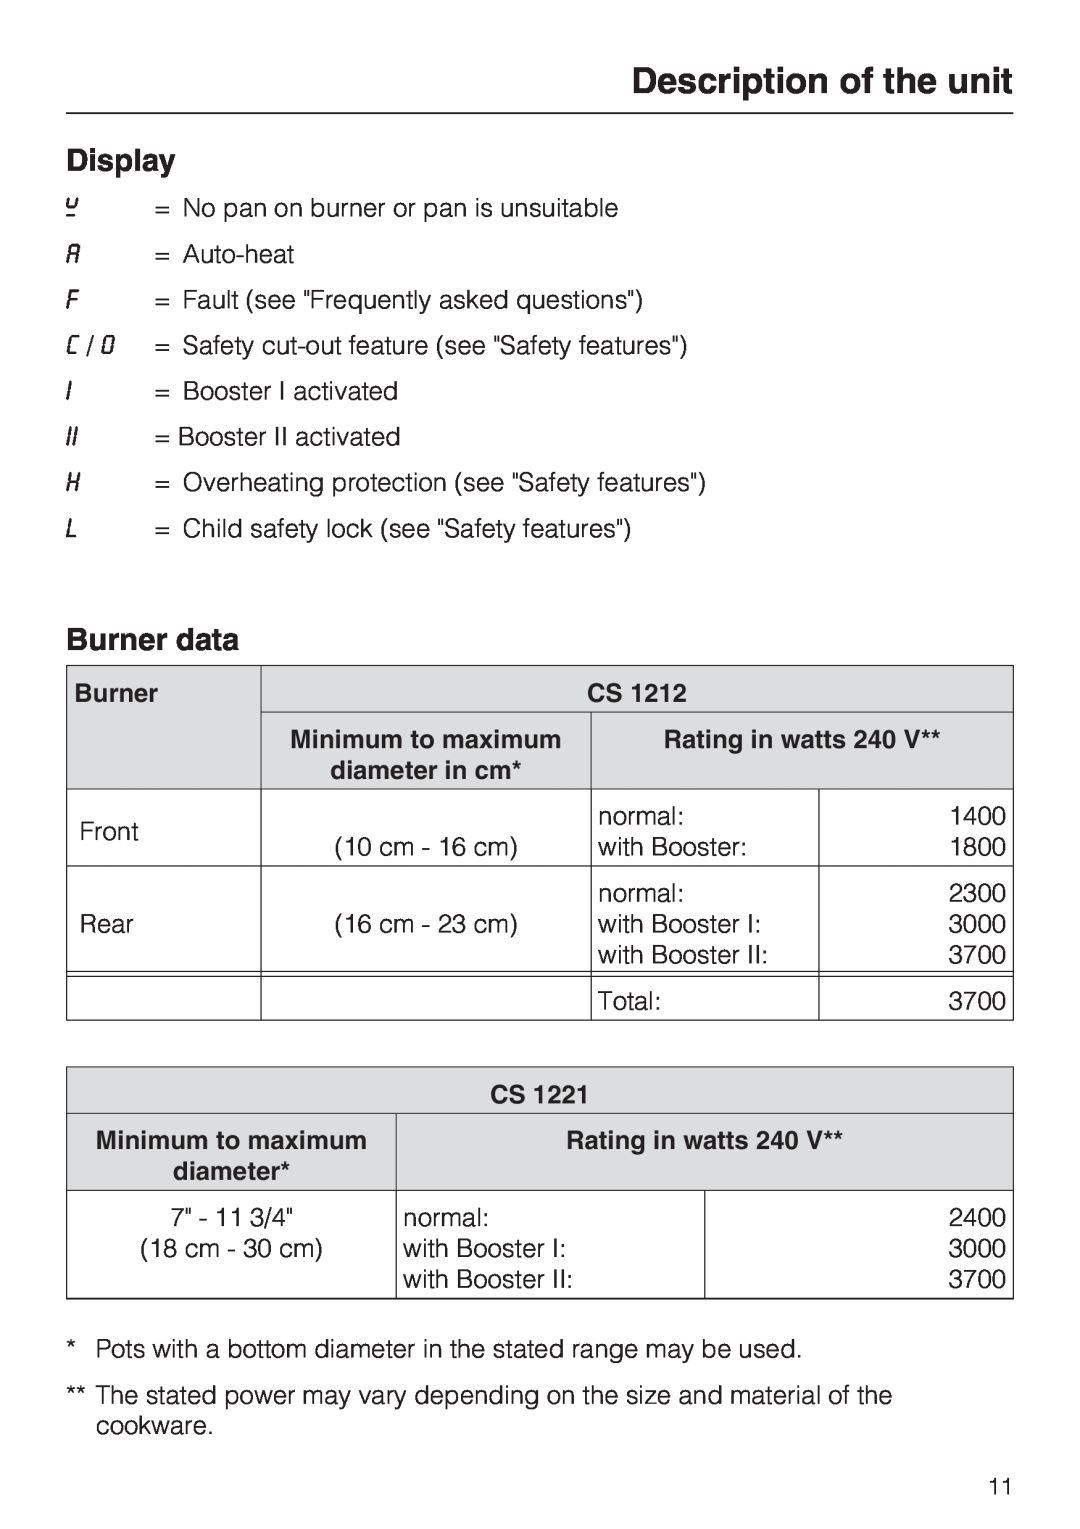 Miele CS1212 Display, Burner data, Description of the unit, Rating in watts 240, Minimum to maximum 